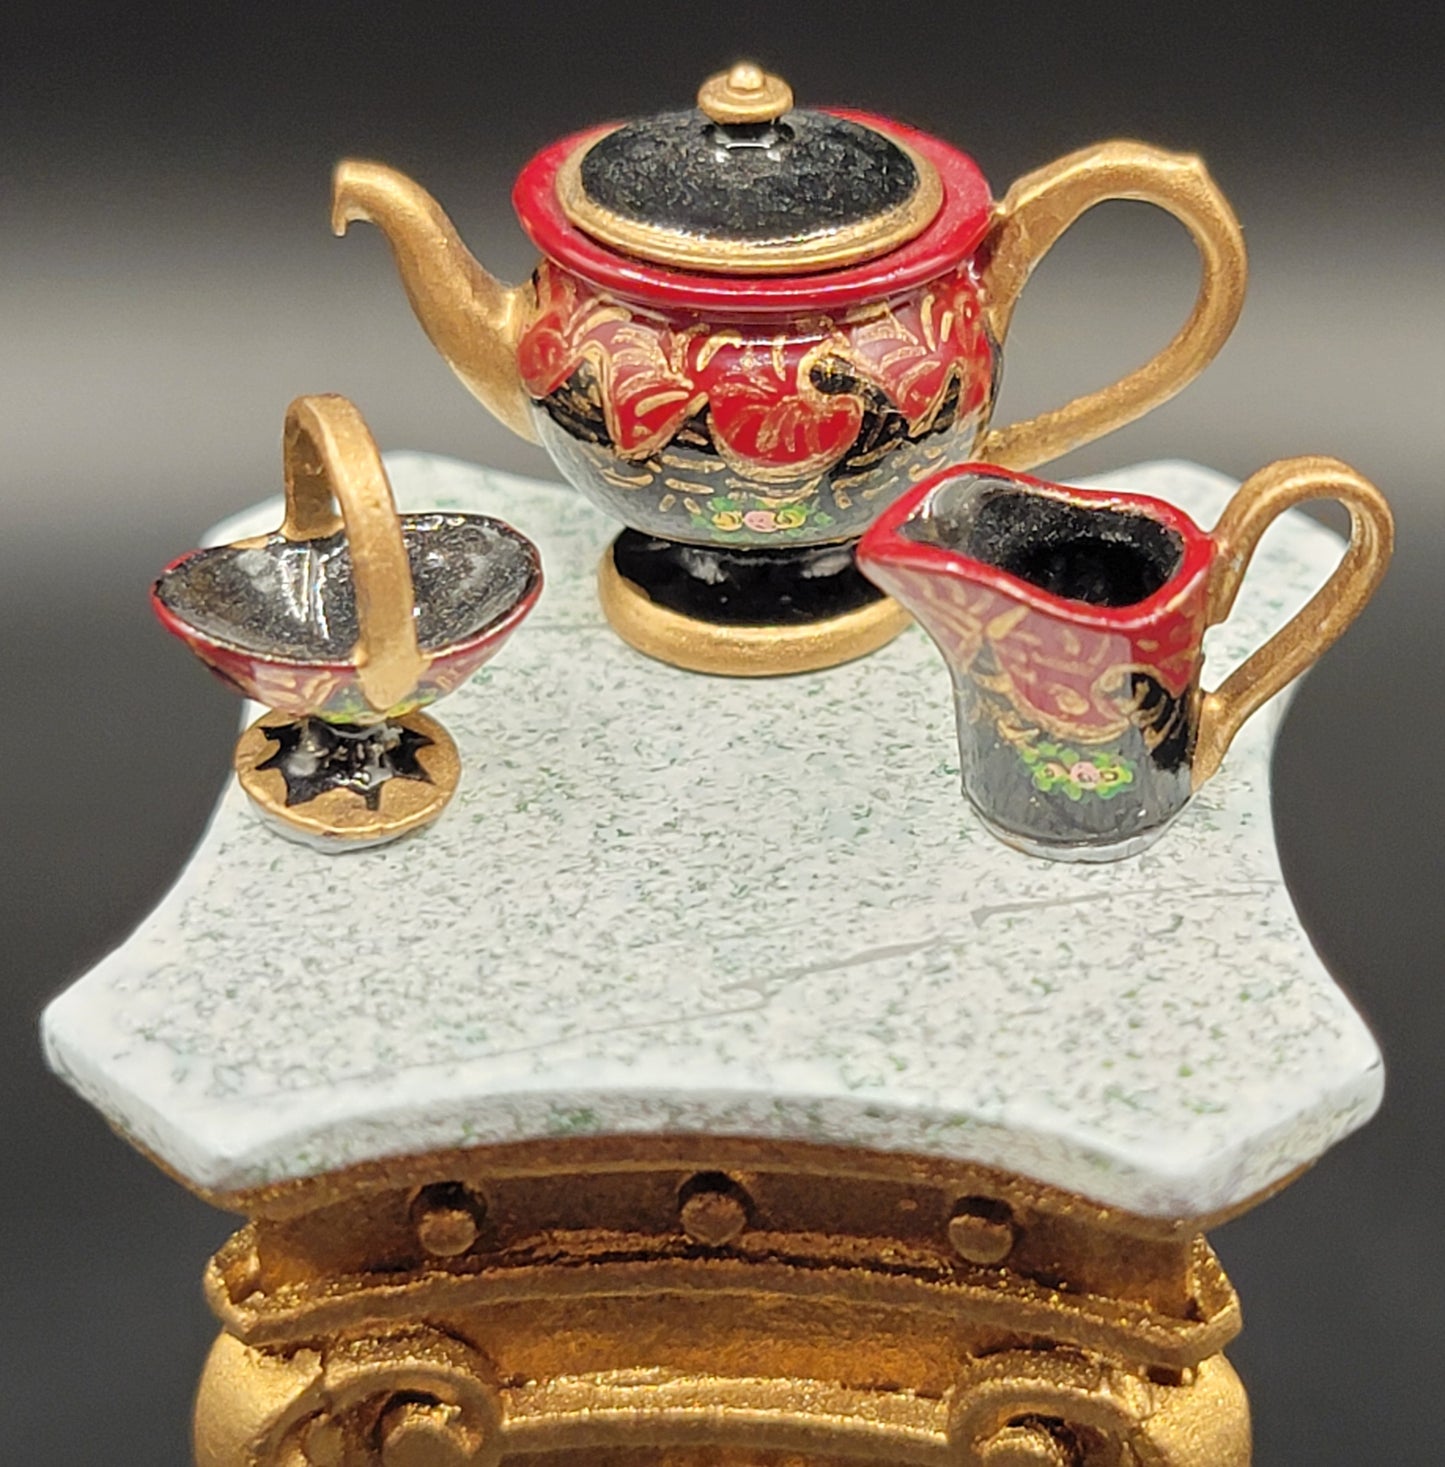 Handpainted Tea Set in Burgundy, Black & Gold with Flowers